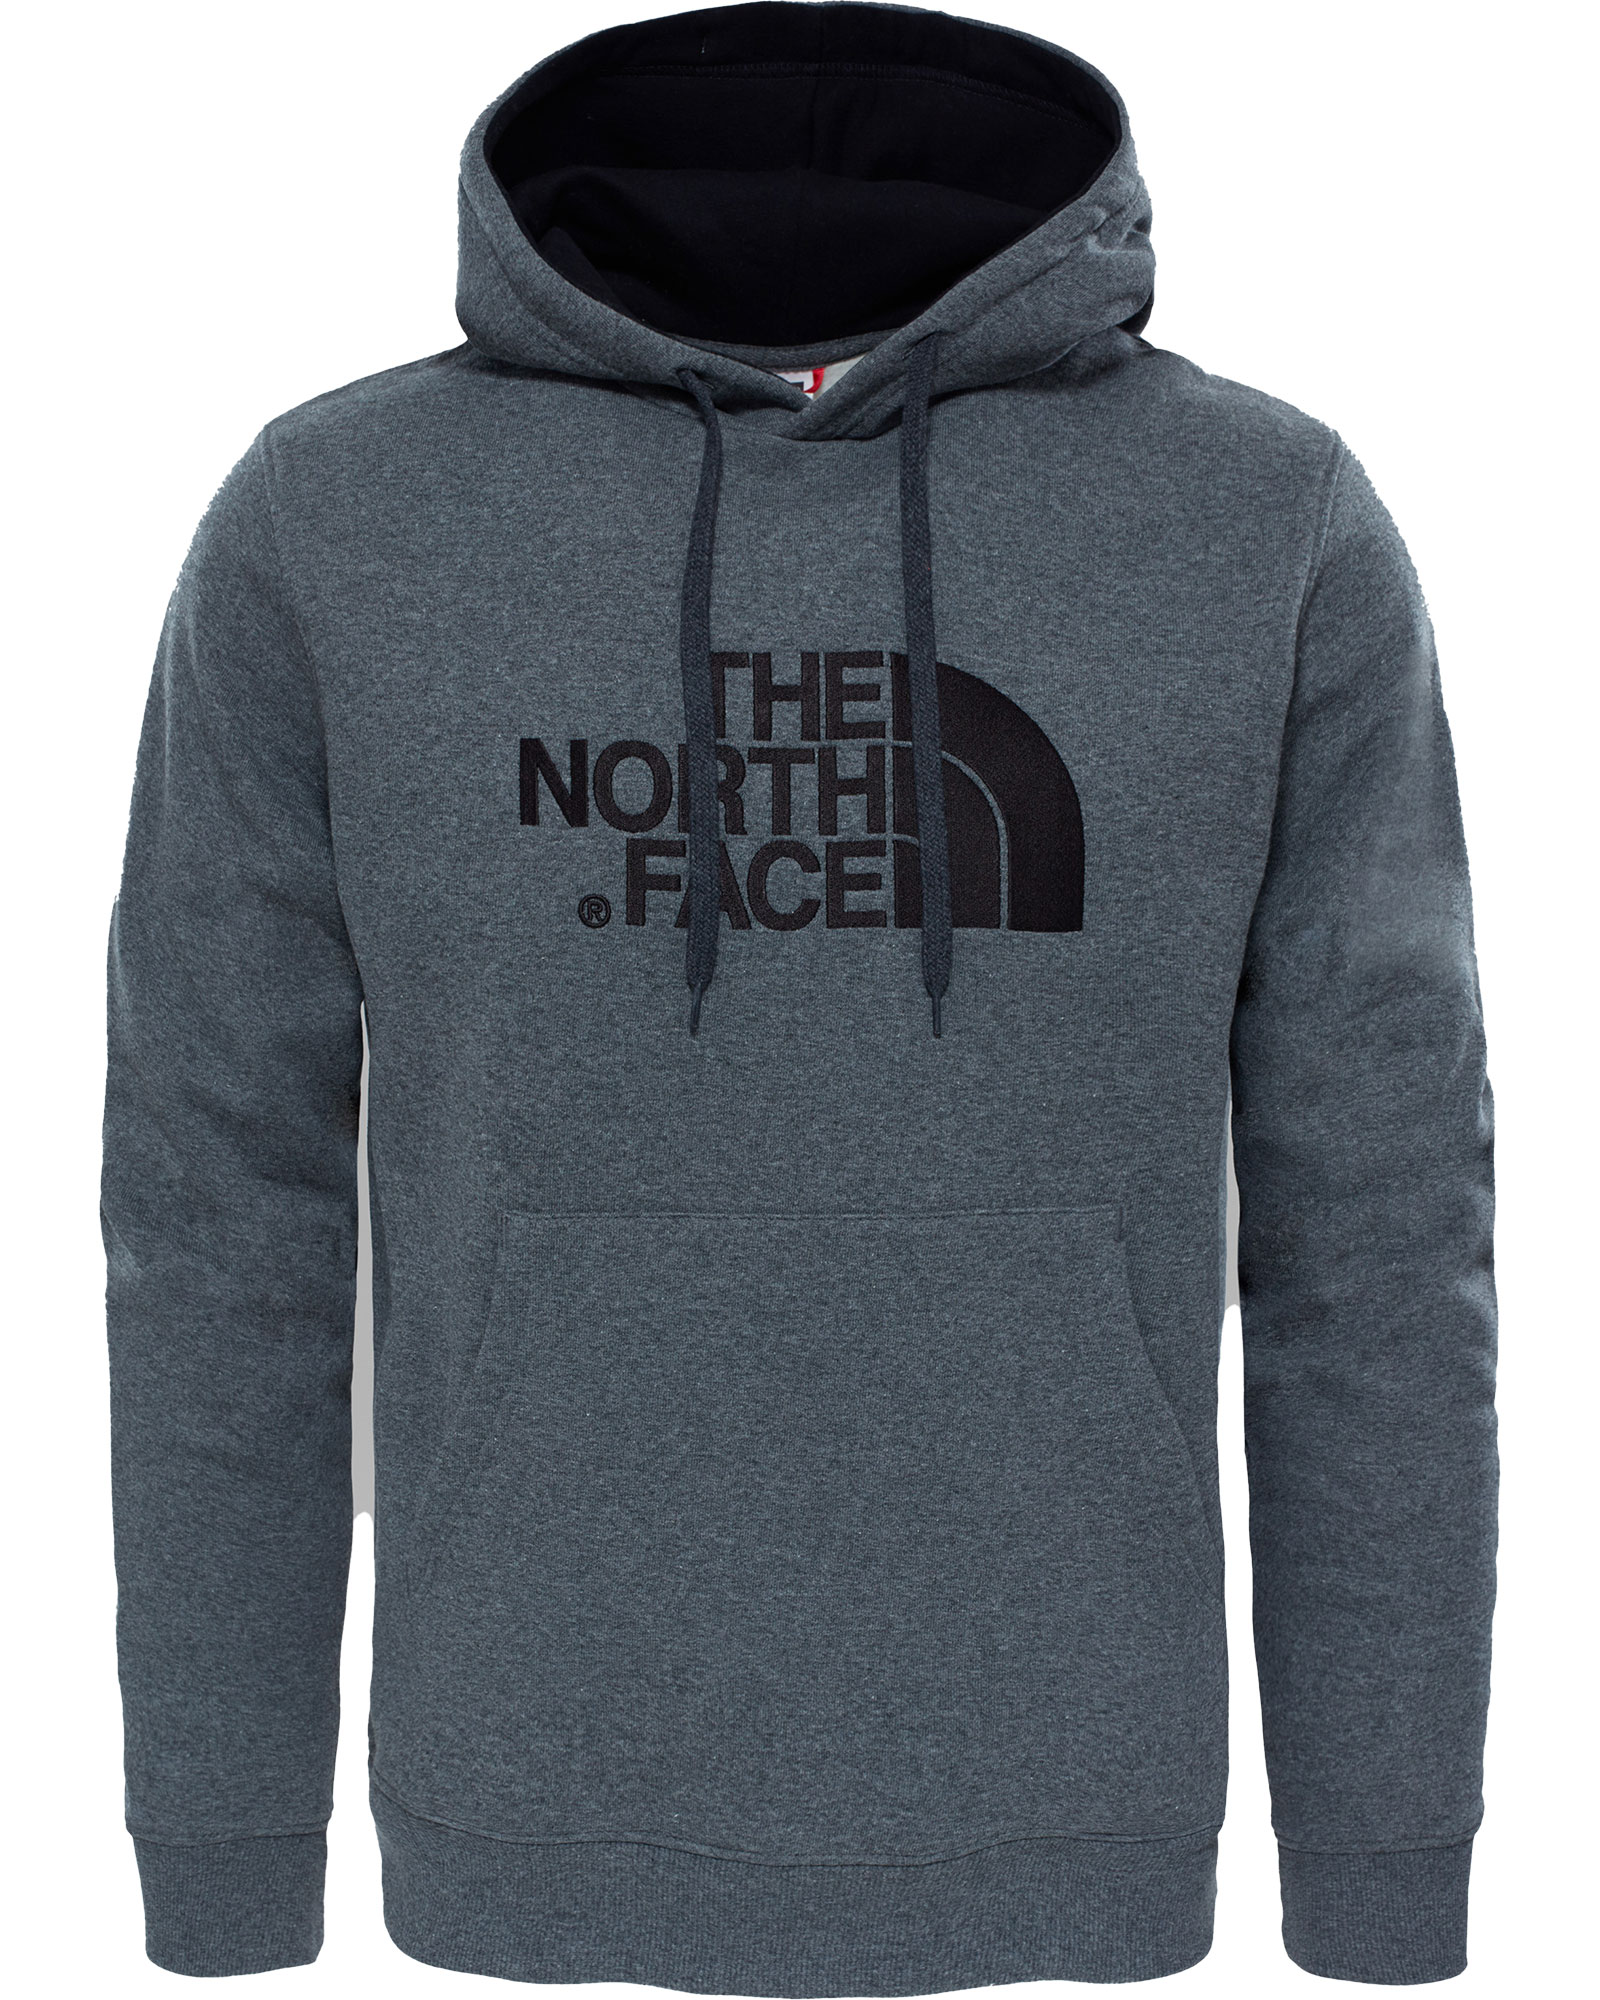 The North Face Drew Peak Men’s Hoodie - TNF Medium Grey Heather XS